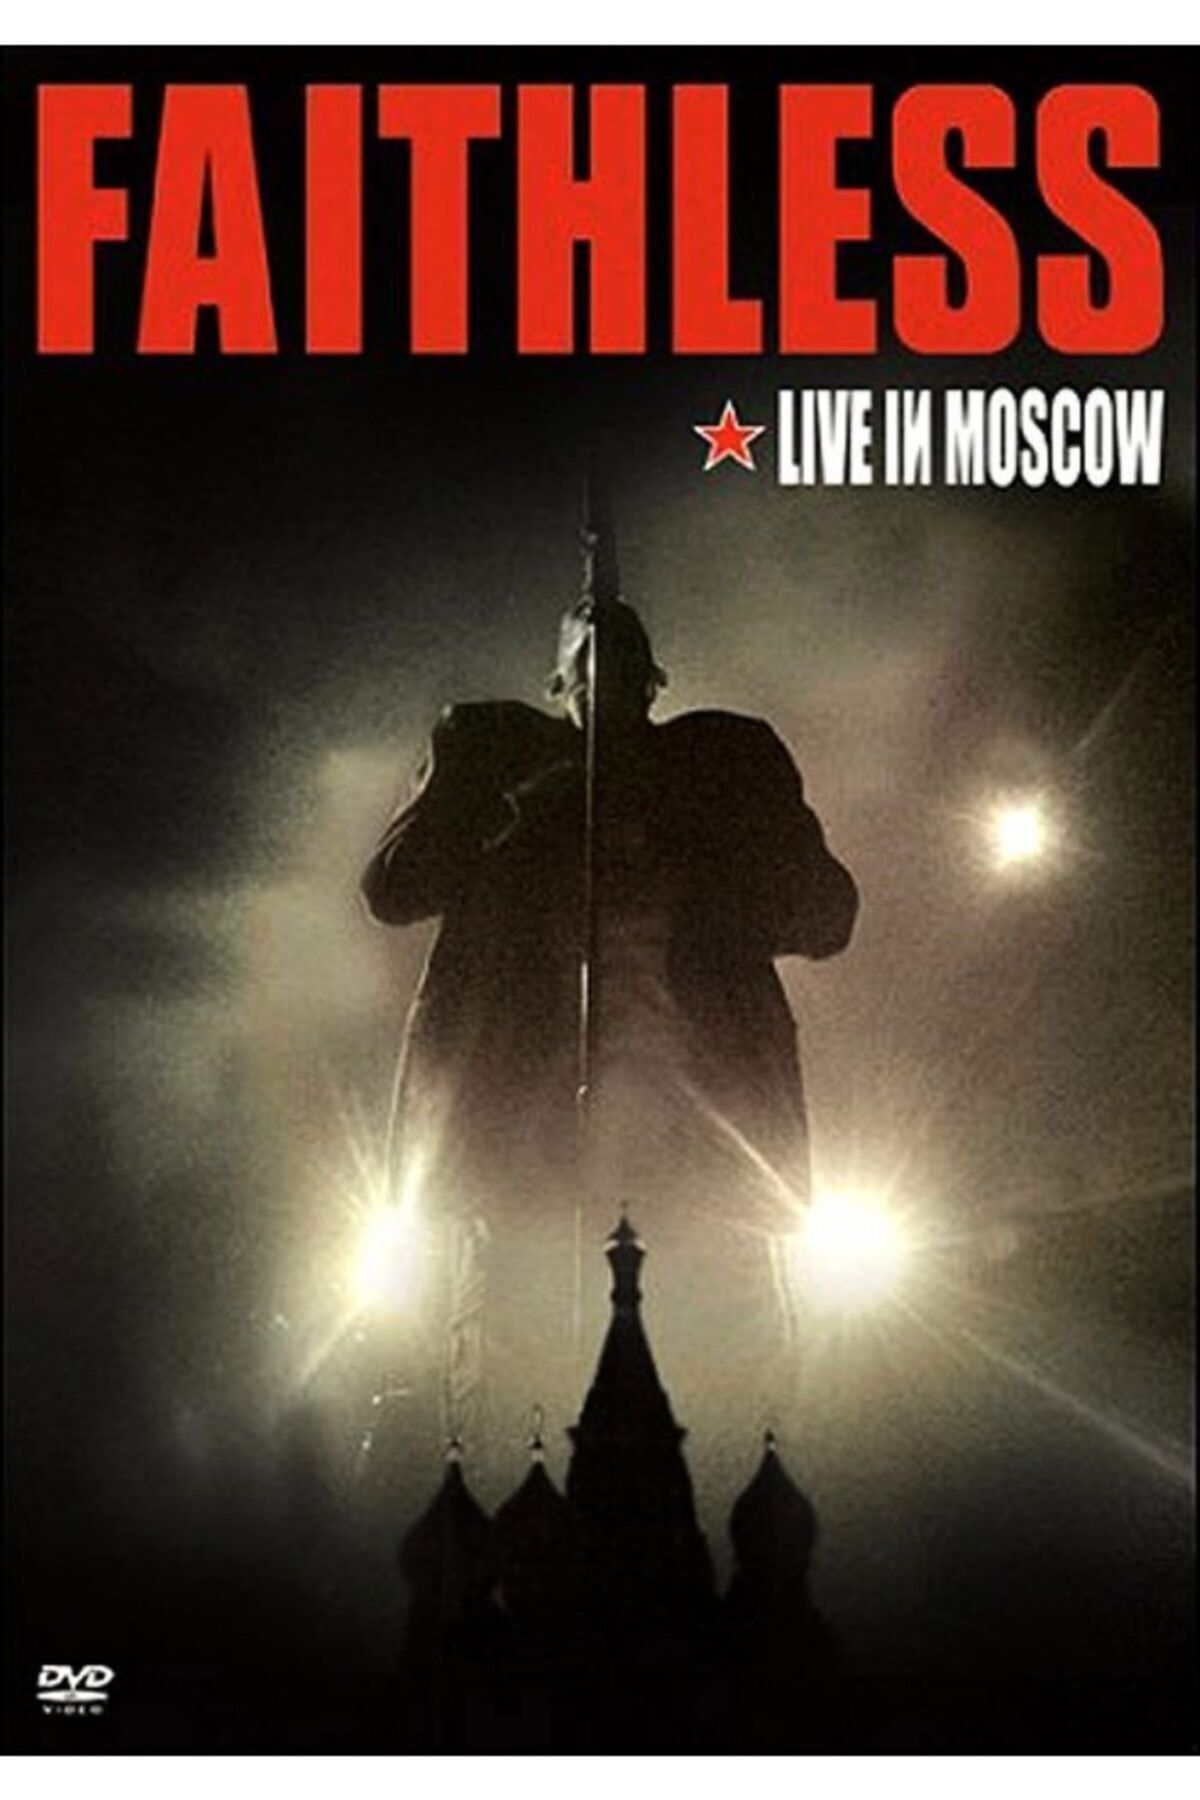 Warner Music Group Dvd - Live In Moskow (faıtless)